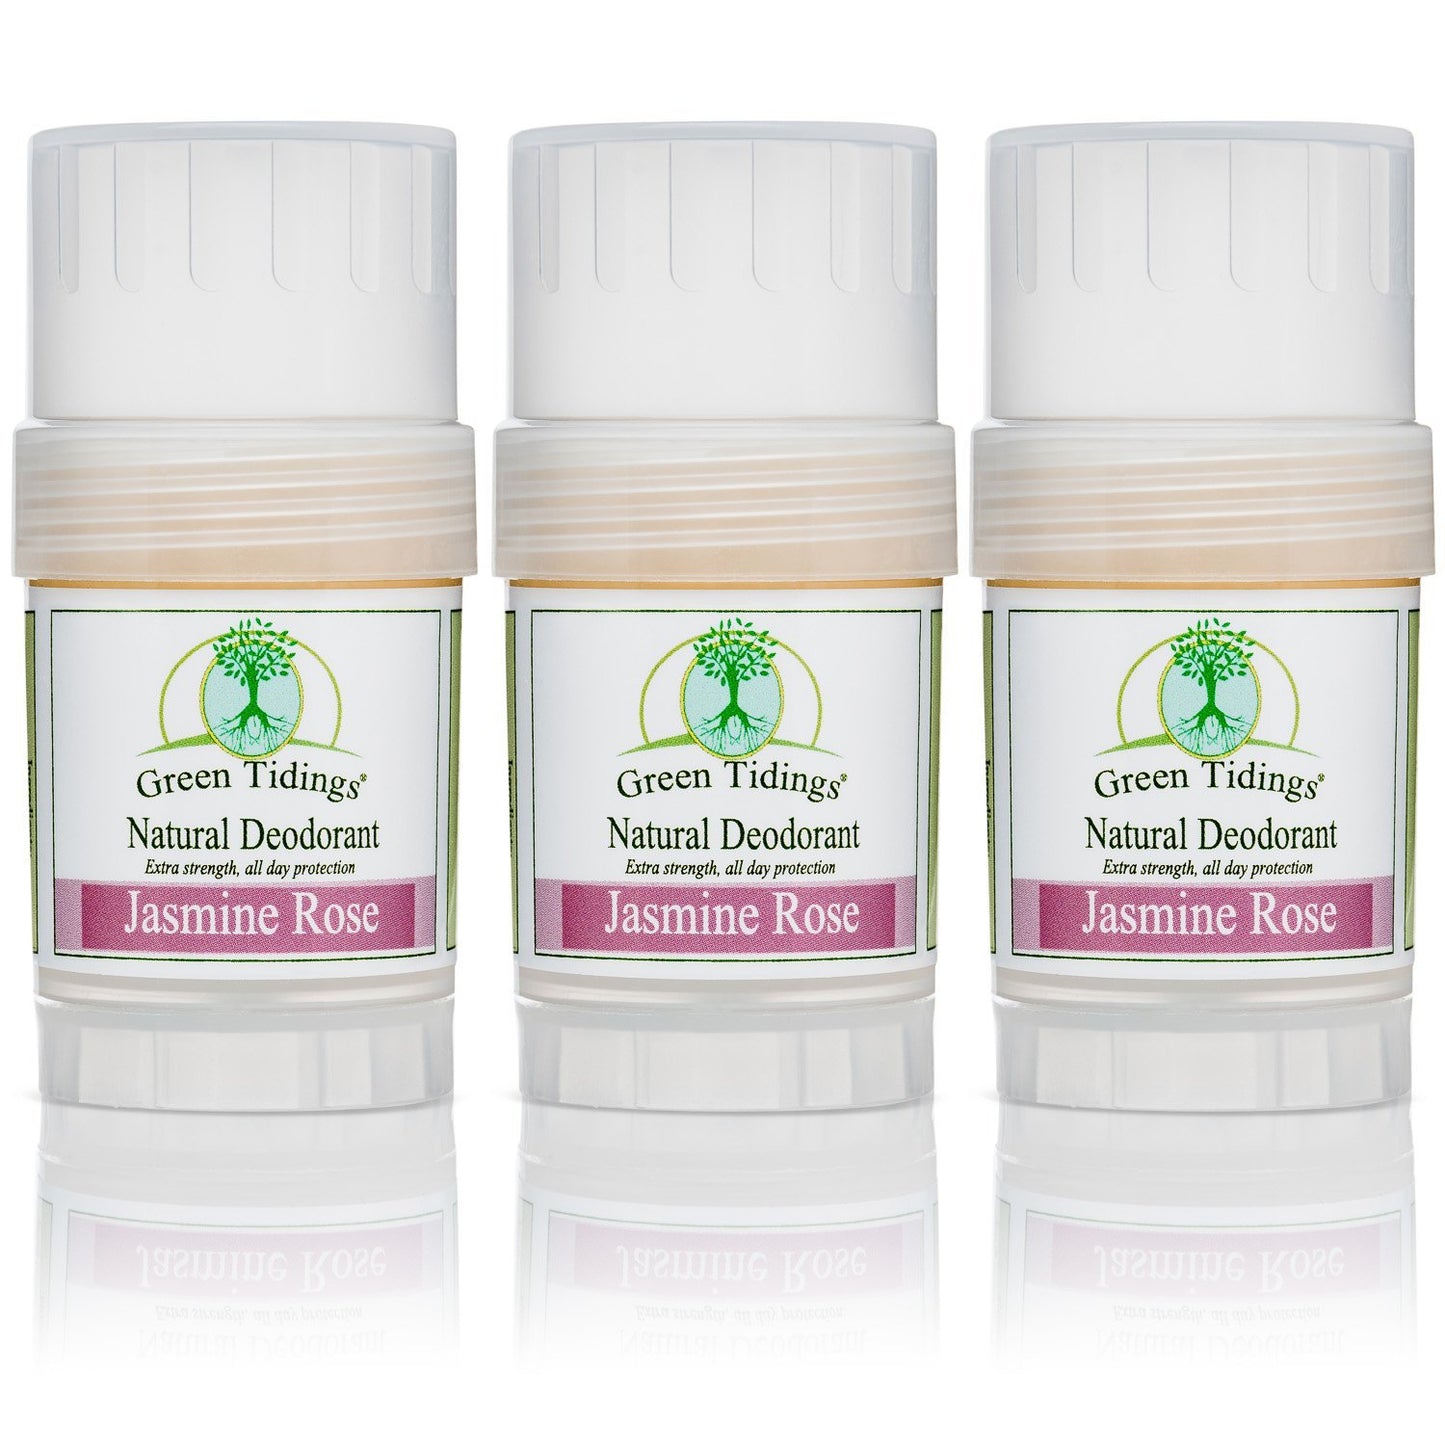 Green Tidings All Natural Deodorant- Jasmine Rose, 1 Ounce 3 PACK 15% OFF - Green Tidings